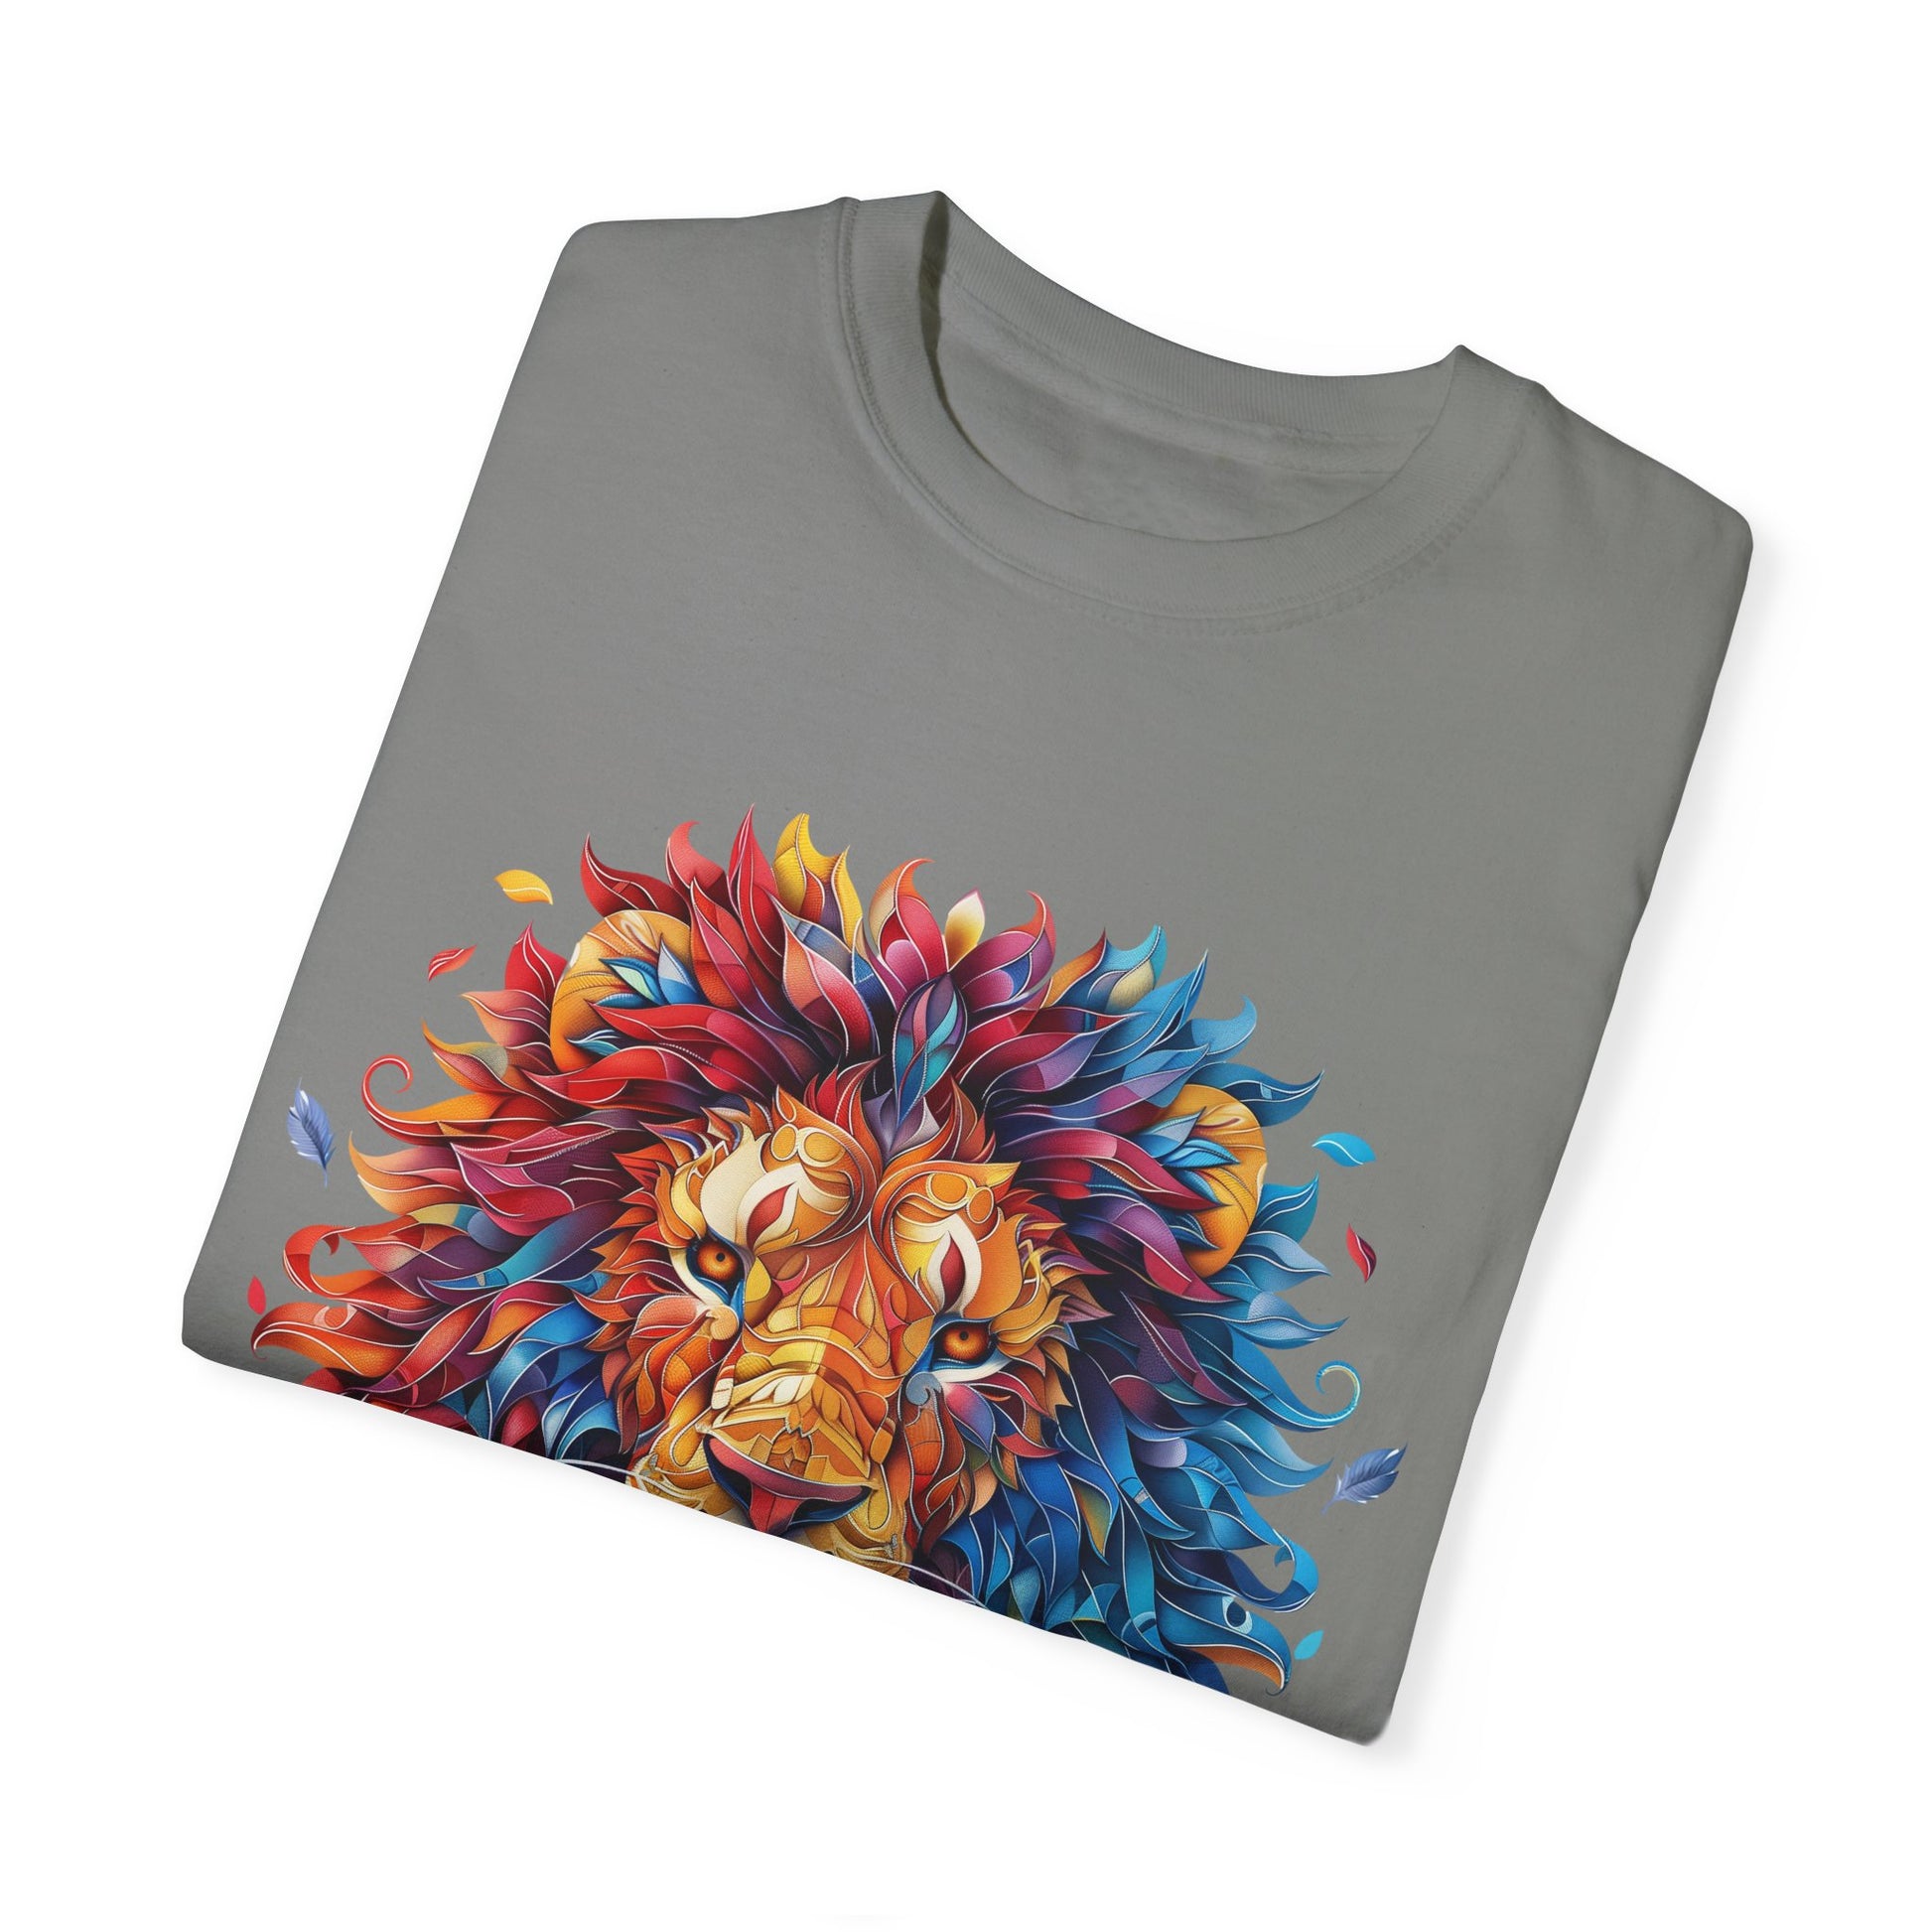 Lion Head Cool Graphic Design Novelty Unisex Garment-dyed T-shirt Cotton Funny Humorous Graphic Soft Premium Unisex Men Women Granite T-shirt Birthday Gift-26